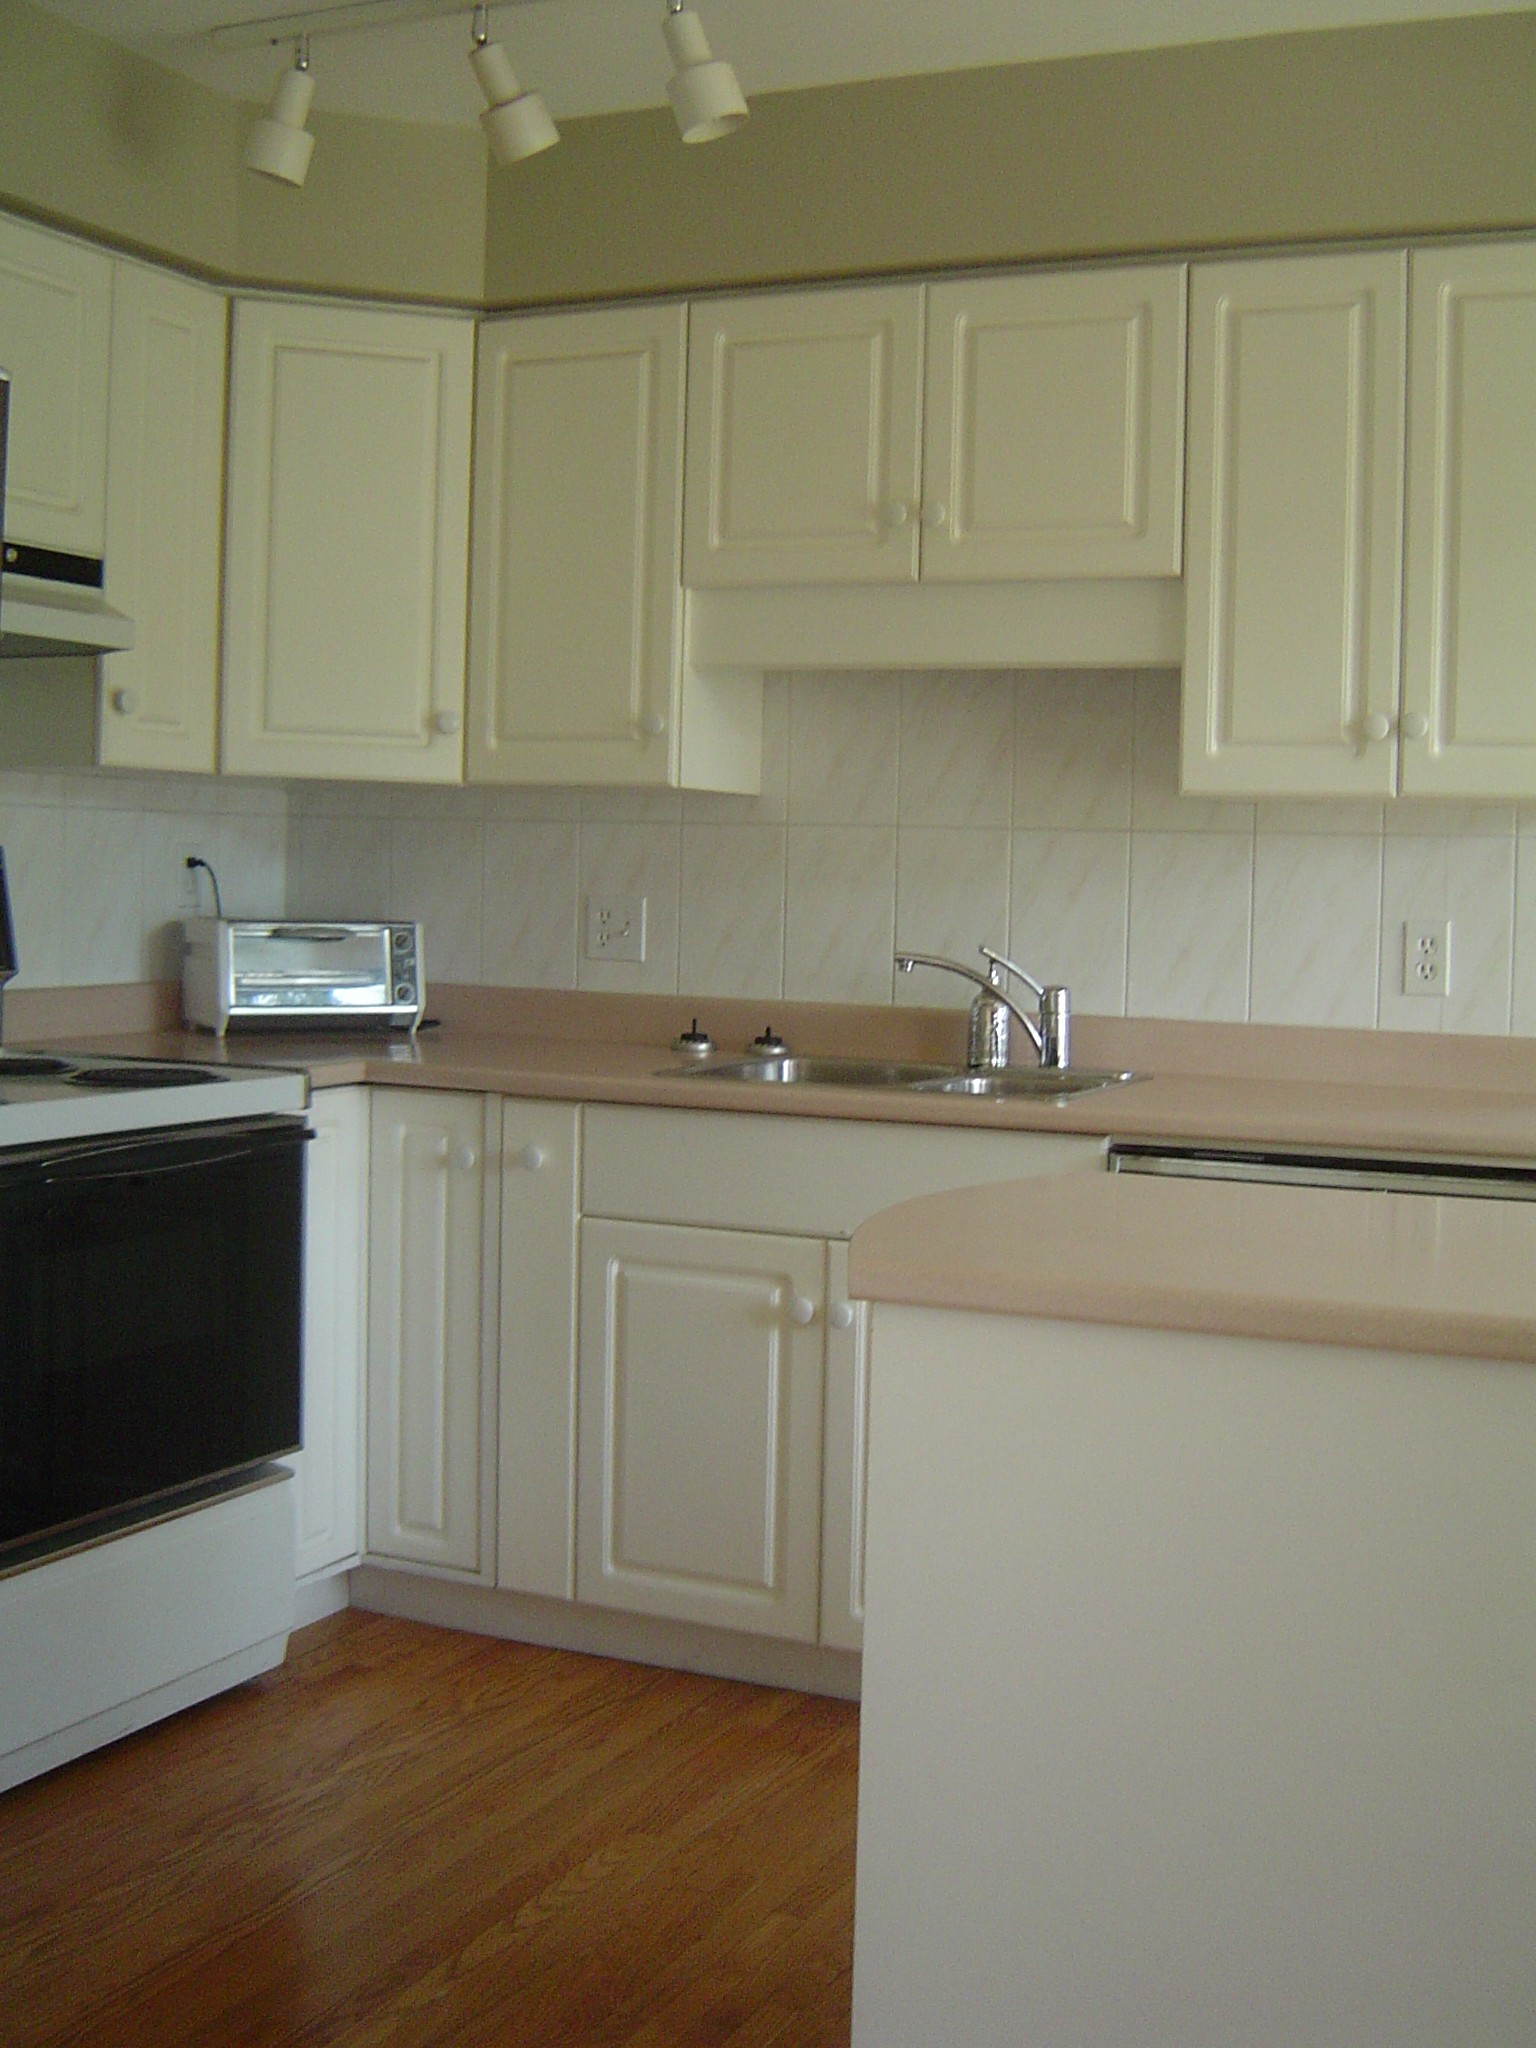 Updated white kitchen wiht hardwood floors